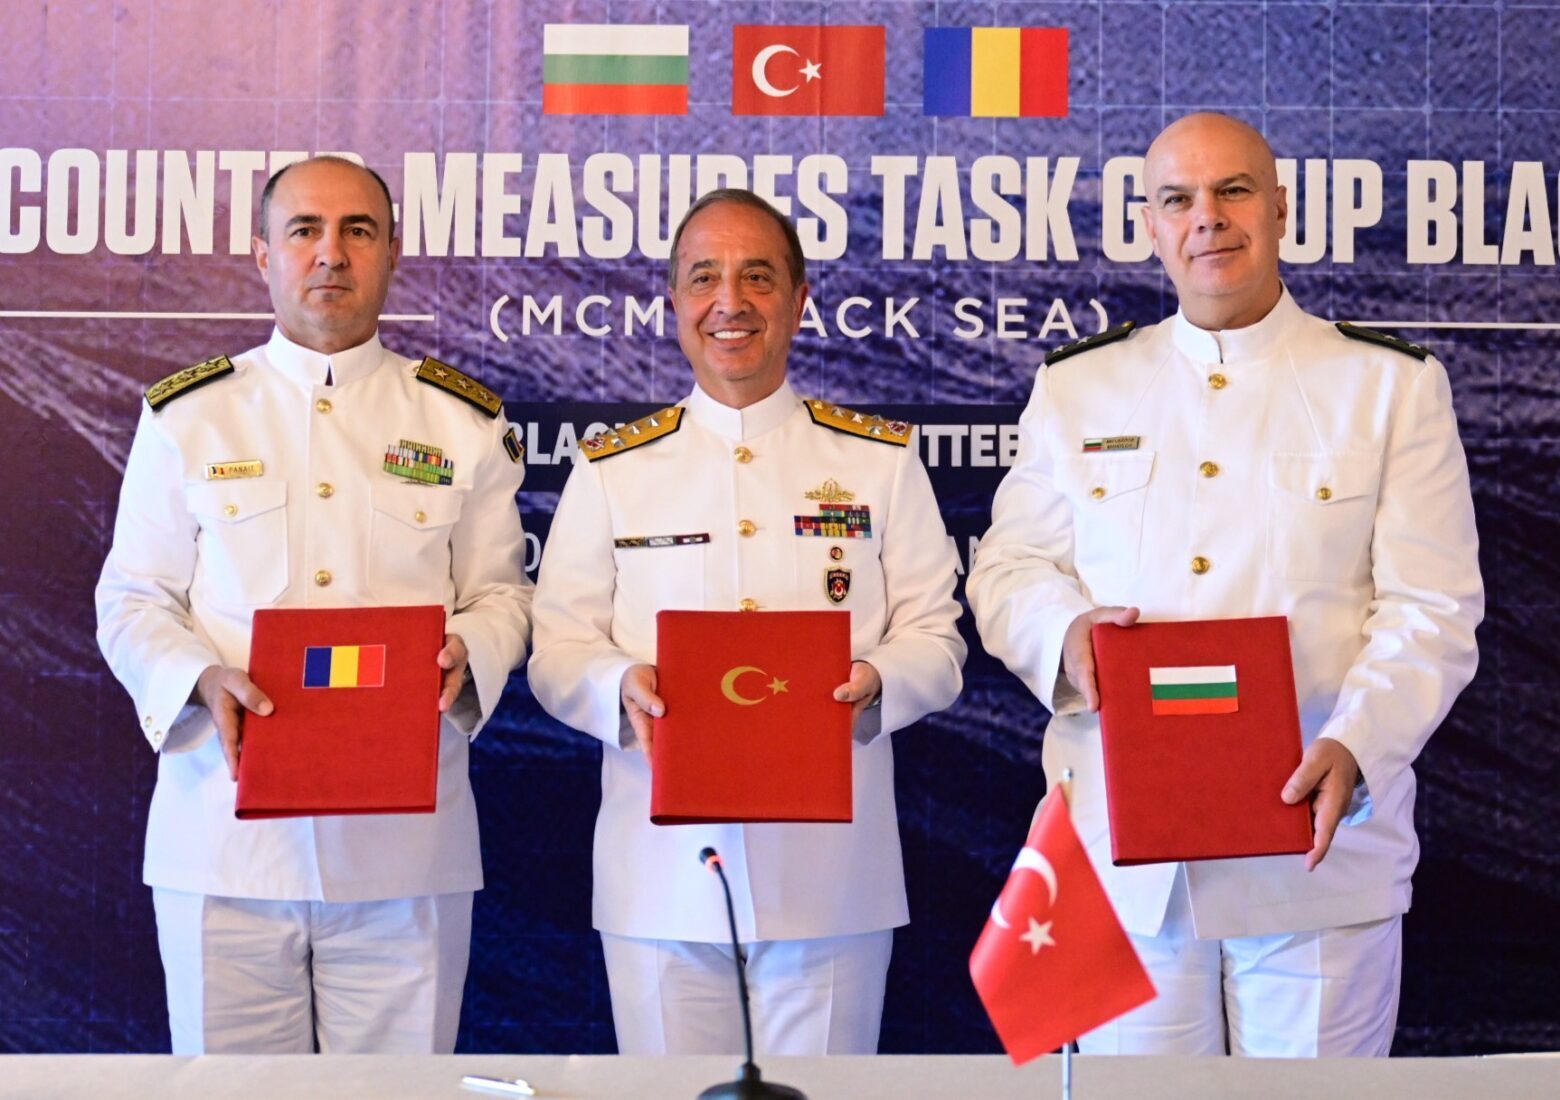 Türkiye, Romania and Bulgaria launch Black Sea Mine Countermeasures Task Group